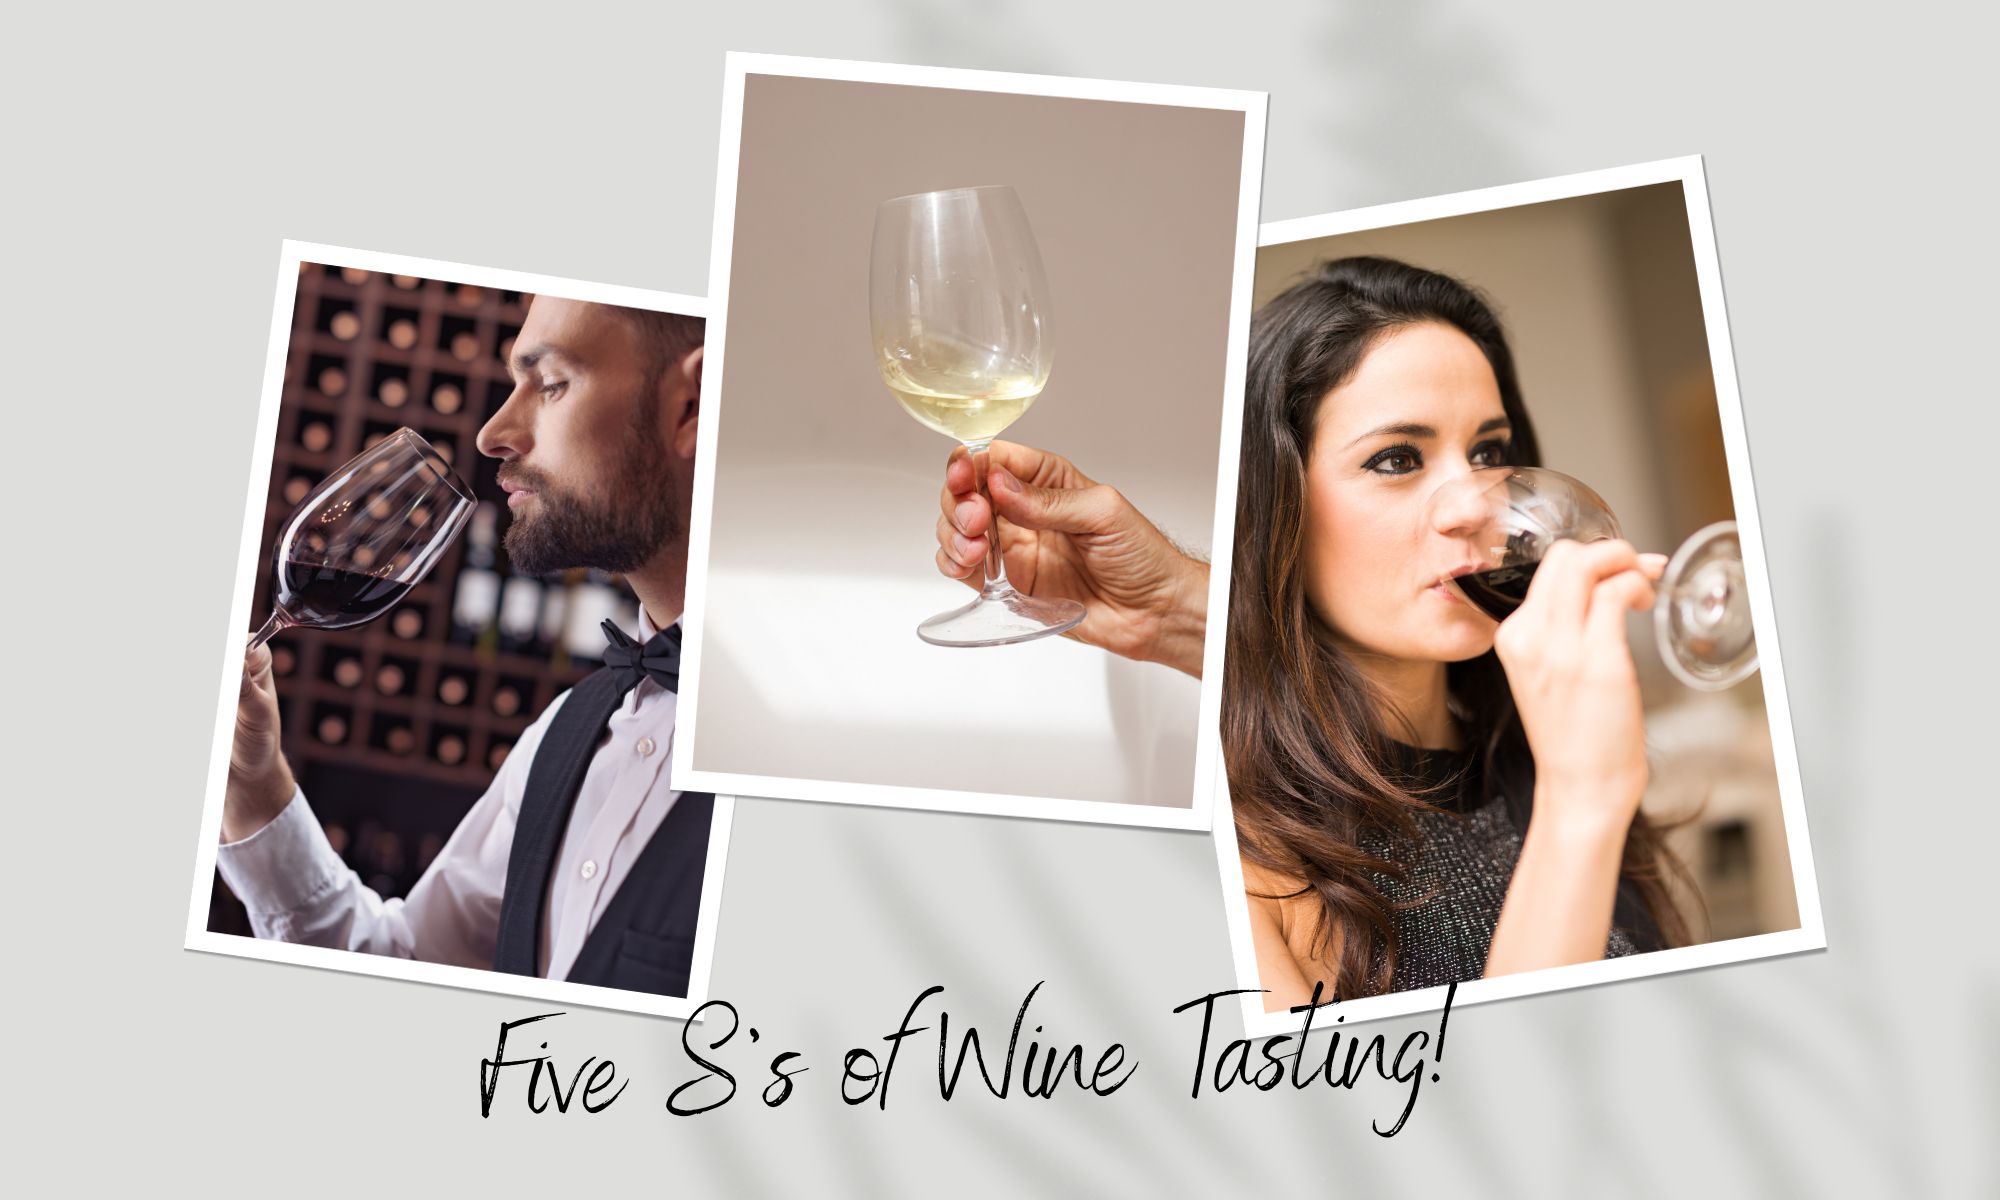 The Five S's of Wine Tasting